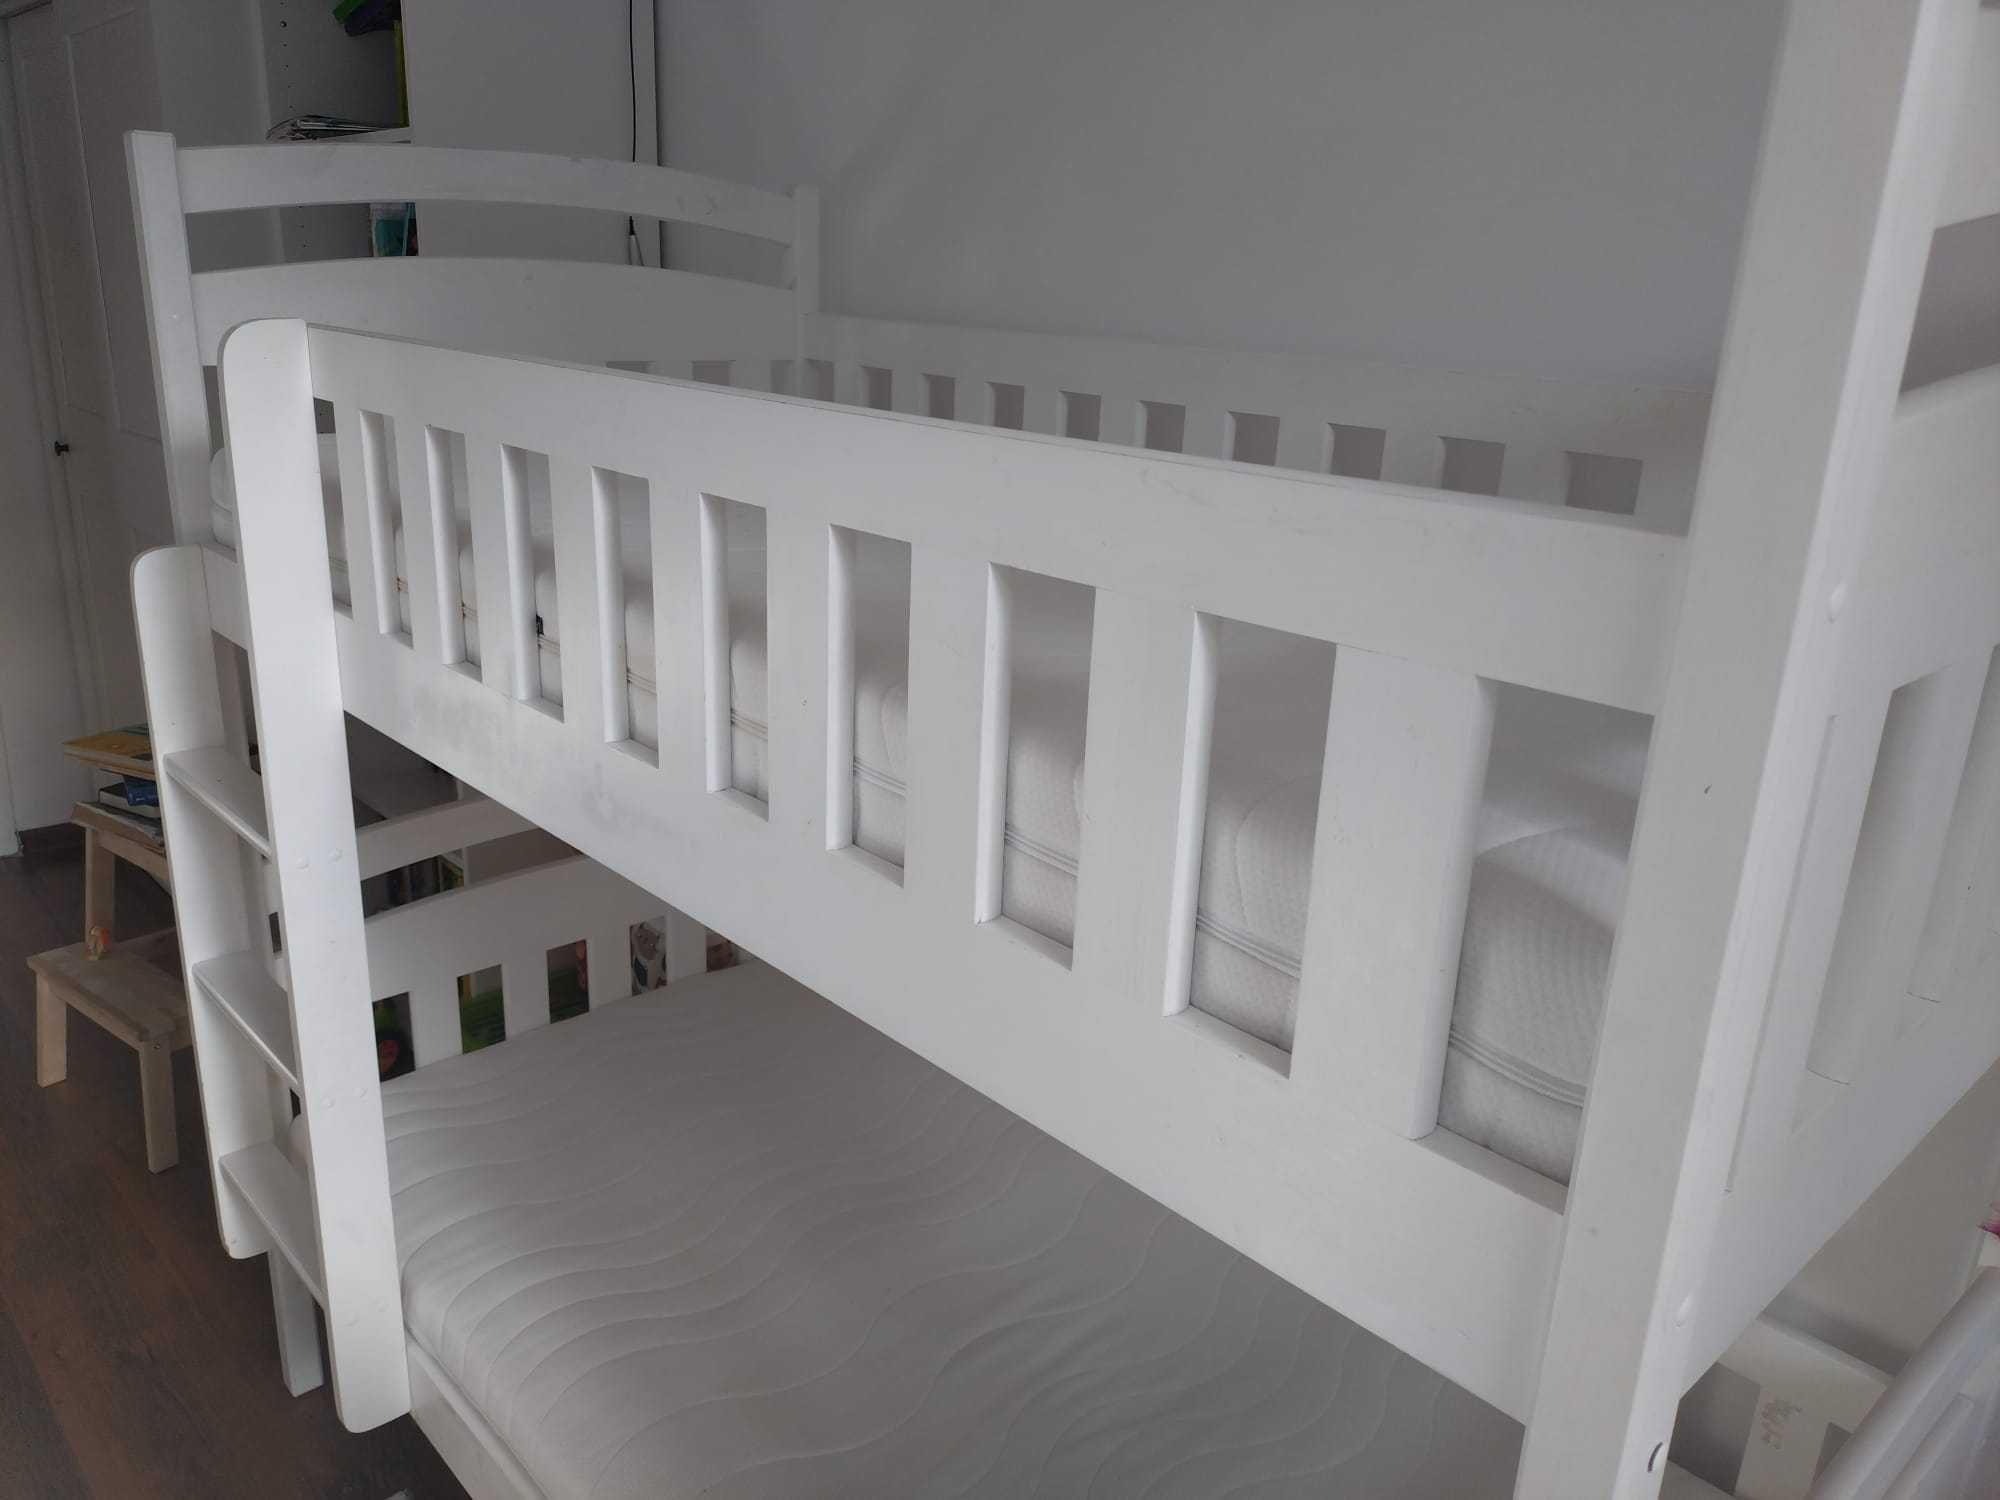 Łóżko piętrowe + materace, 80x160